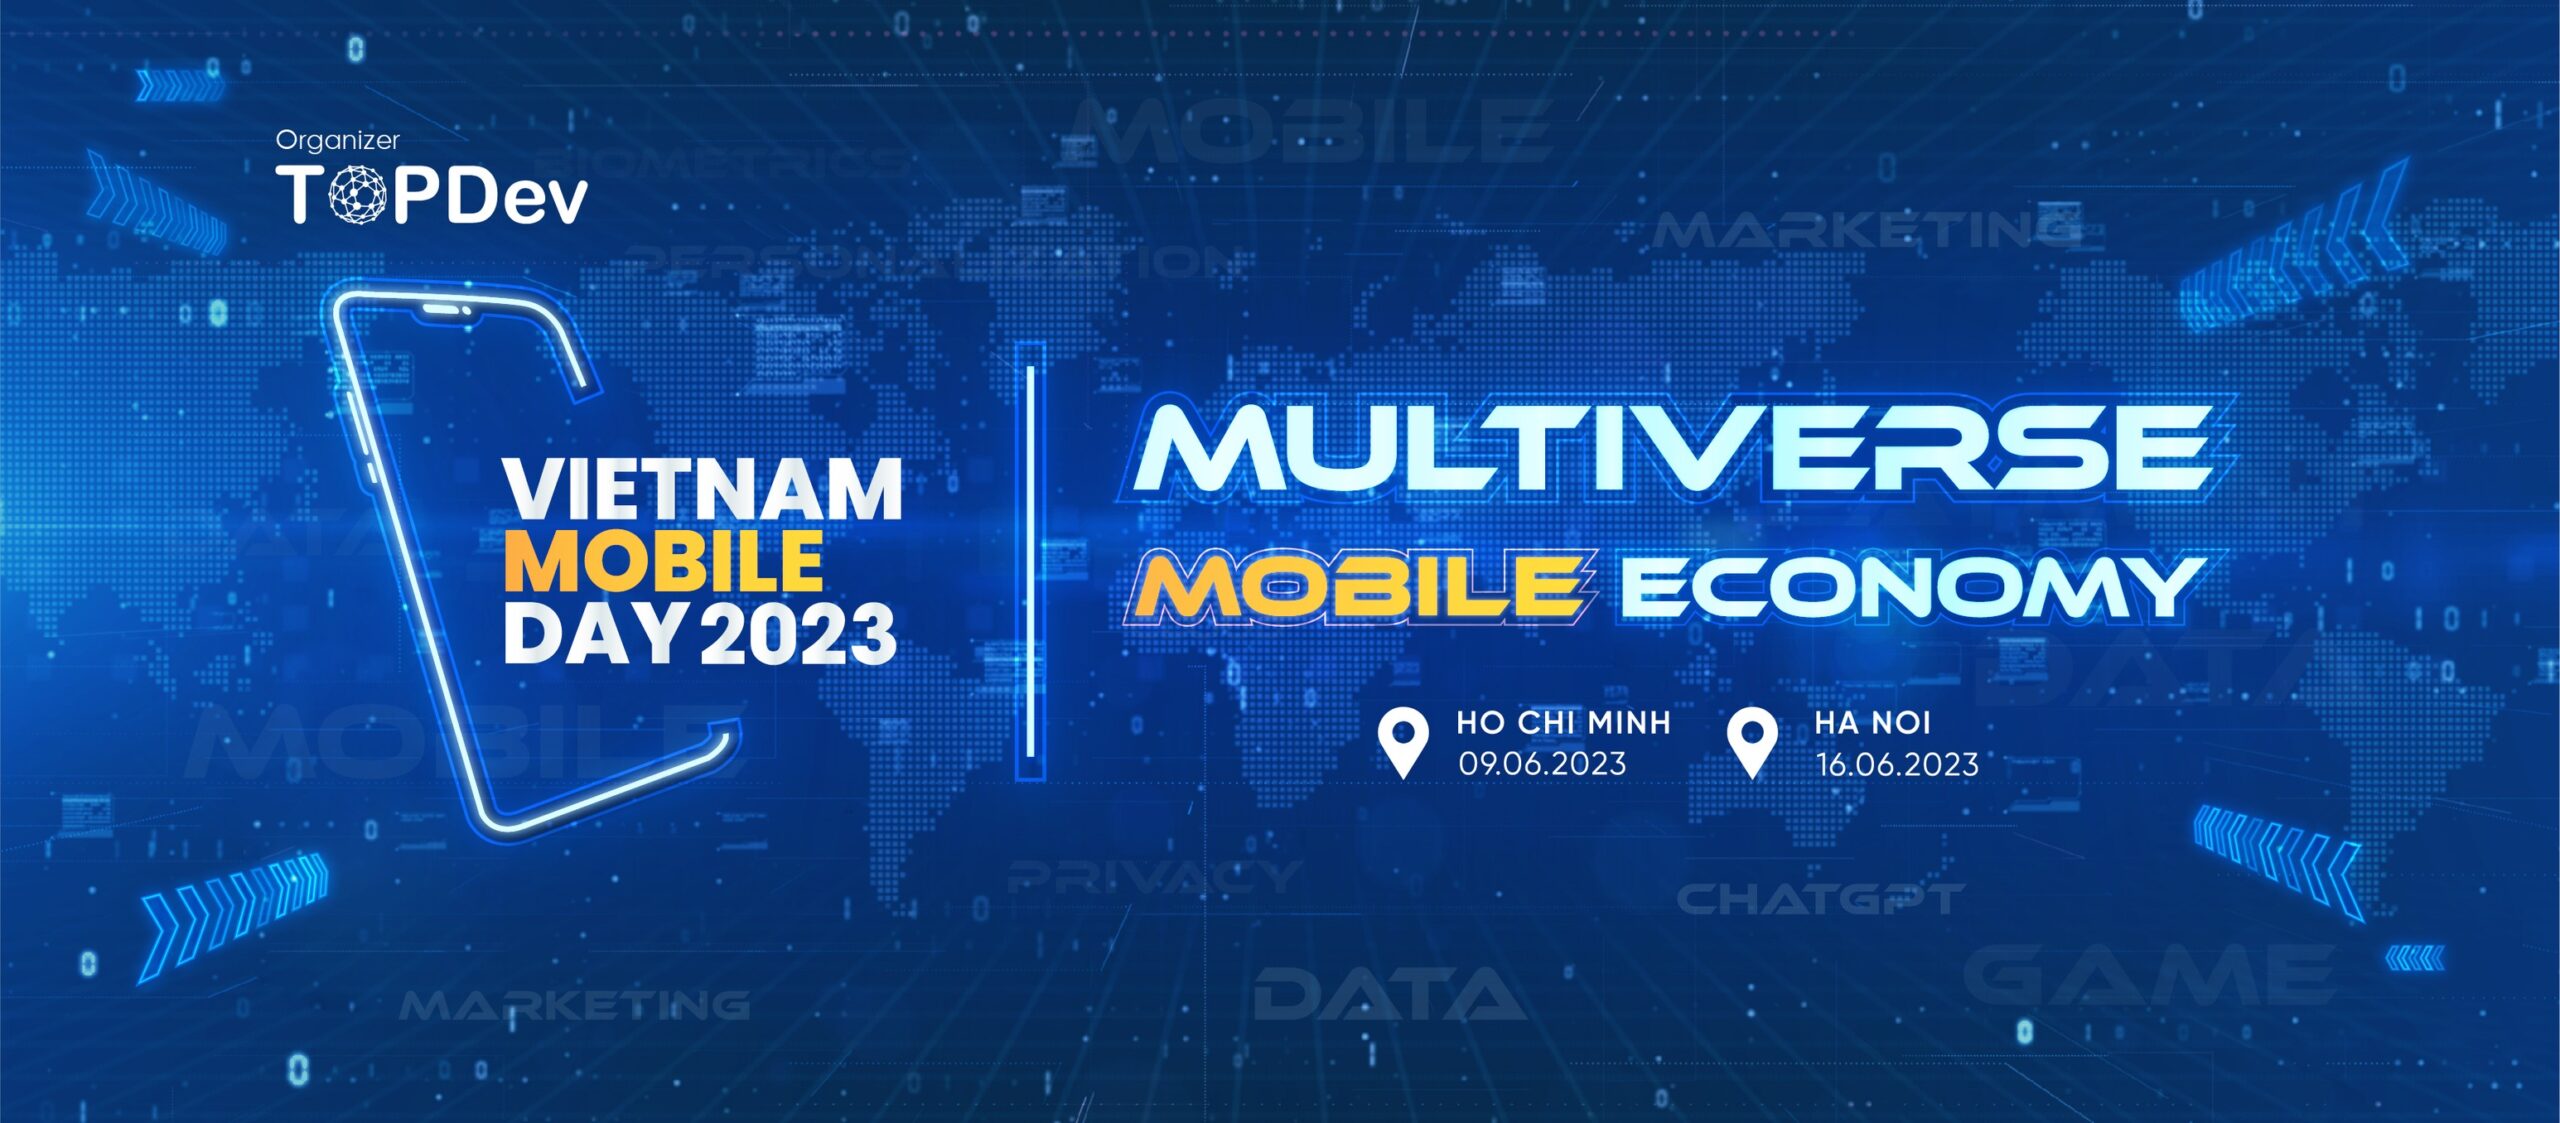 Vietnam Mobile Day 2023